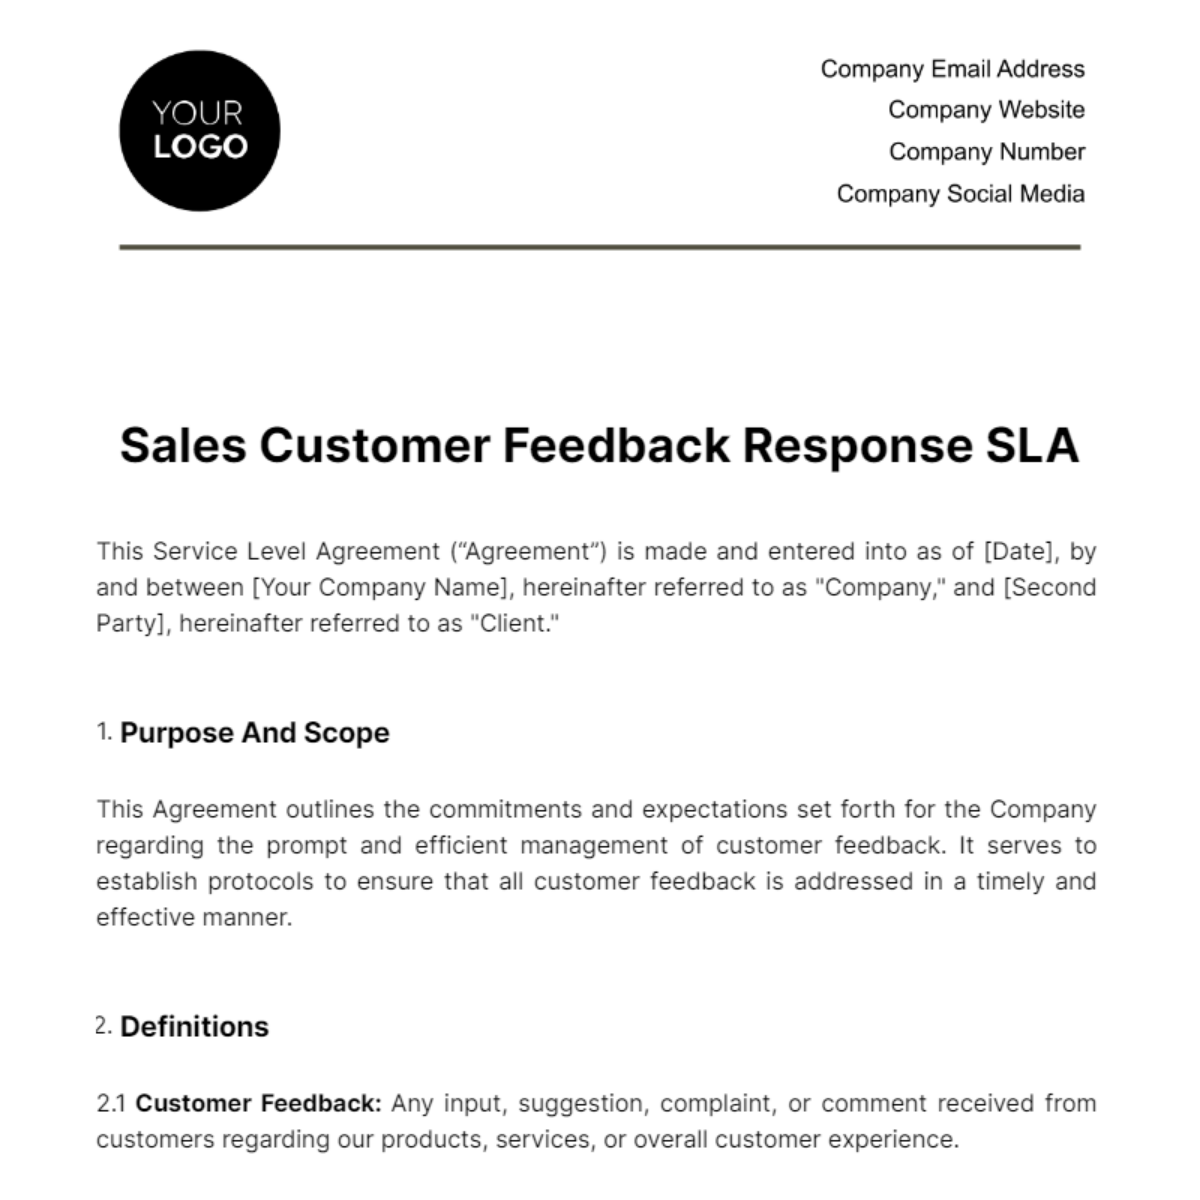 Sales Customer Feedback Response SLA Template